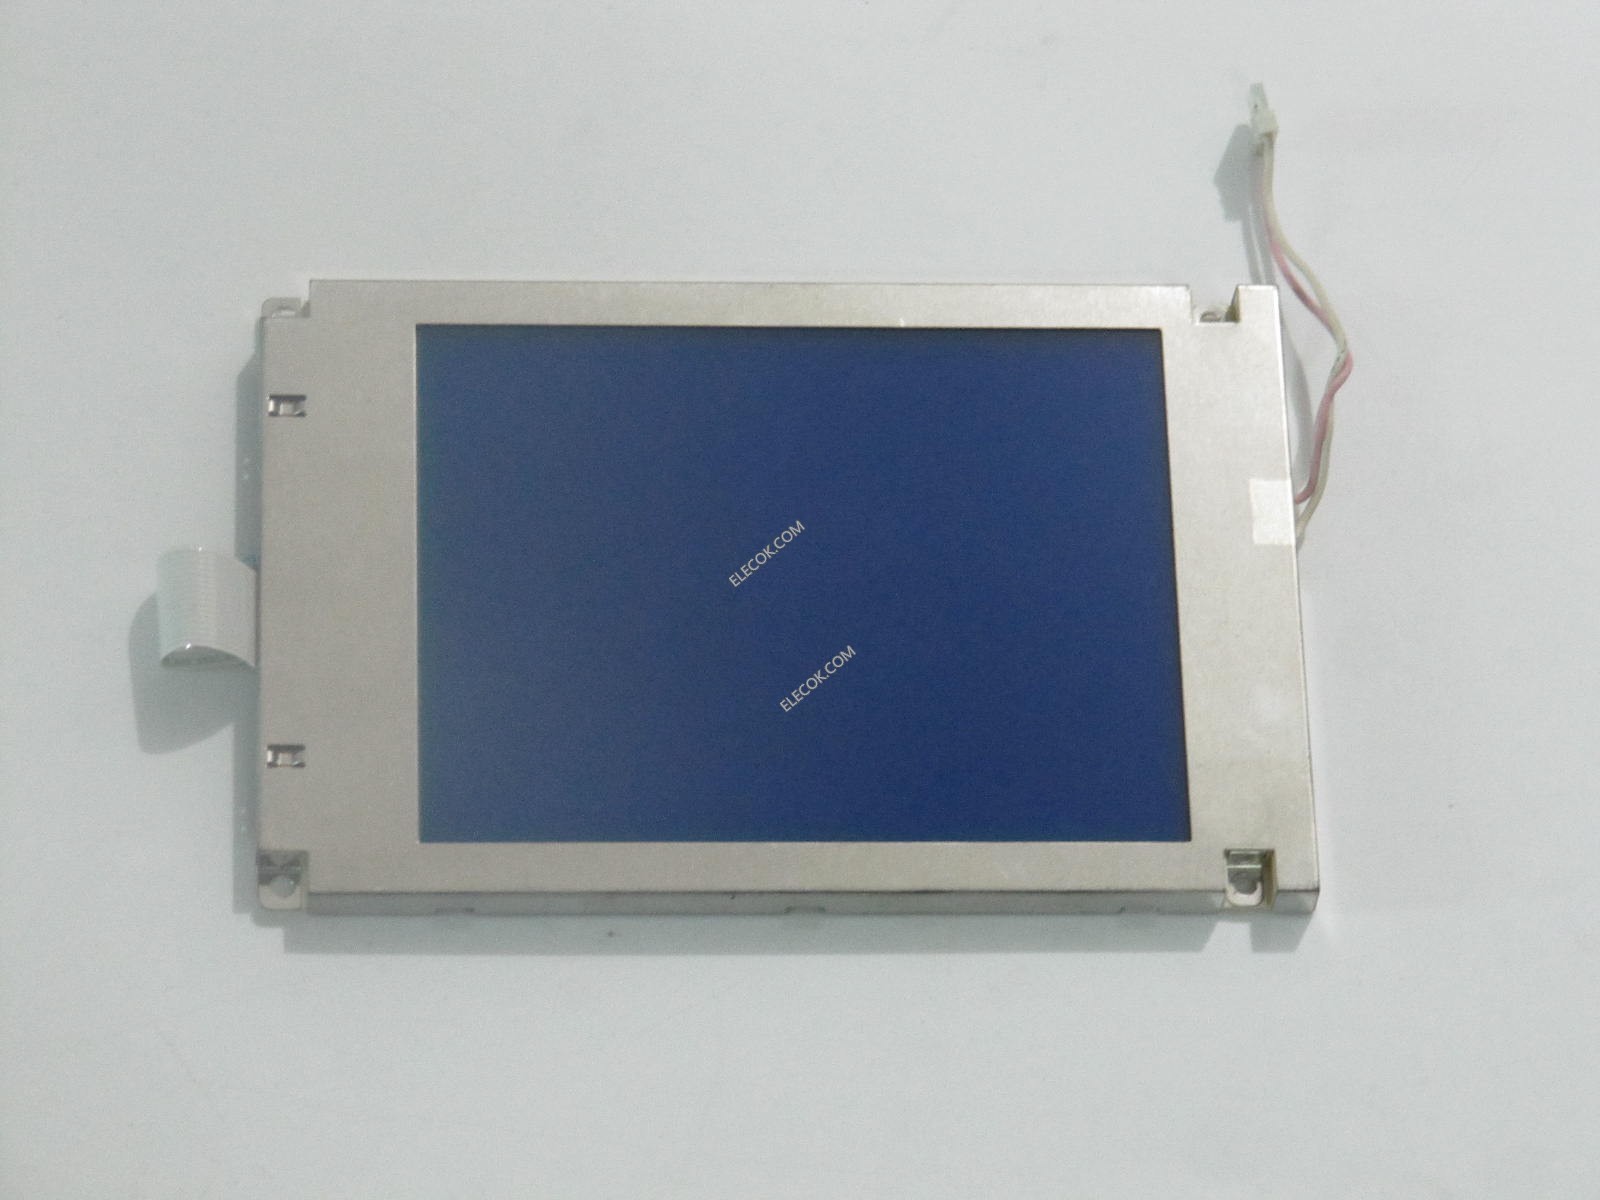 Hitachi SP14Q009 Pantalla LCD para Pantalla Universal Siemens TP177A TP177B 1 un